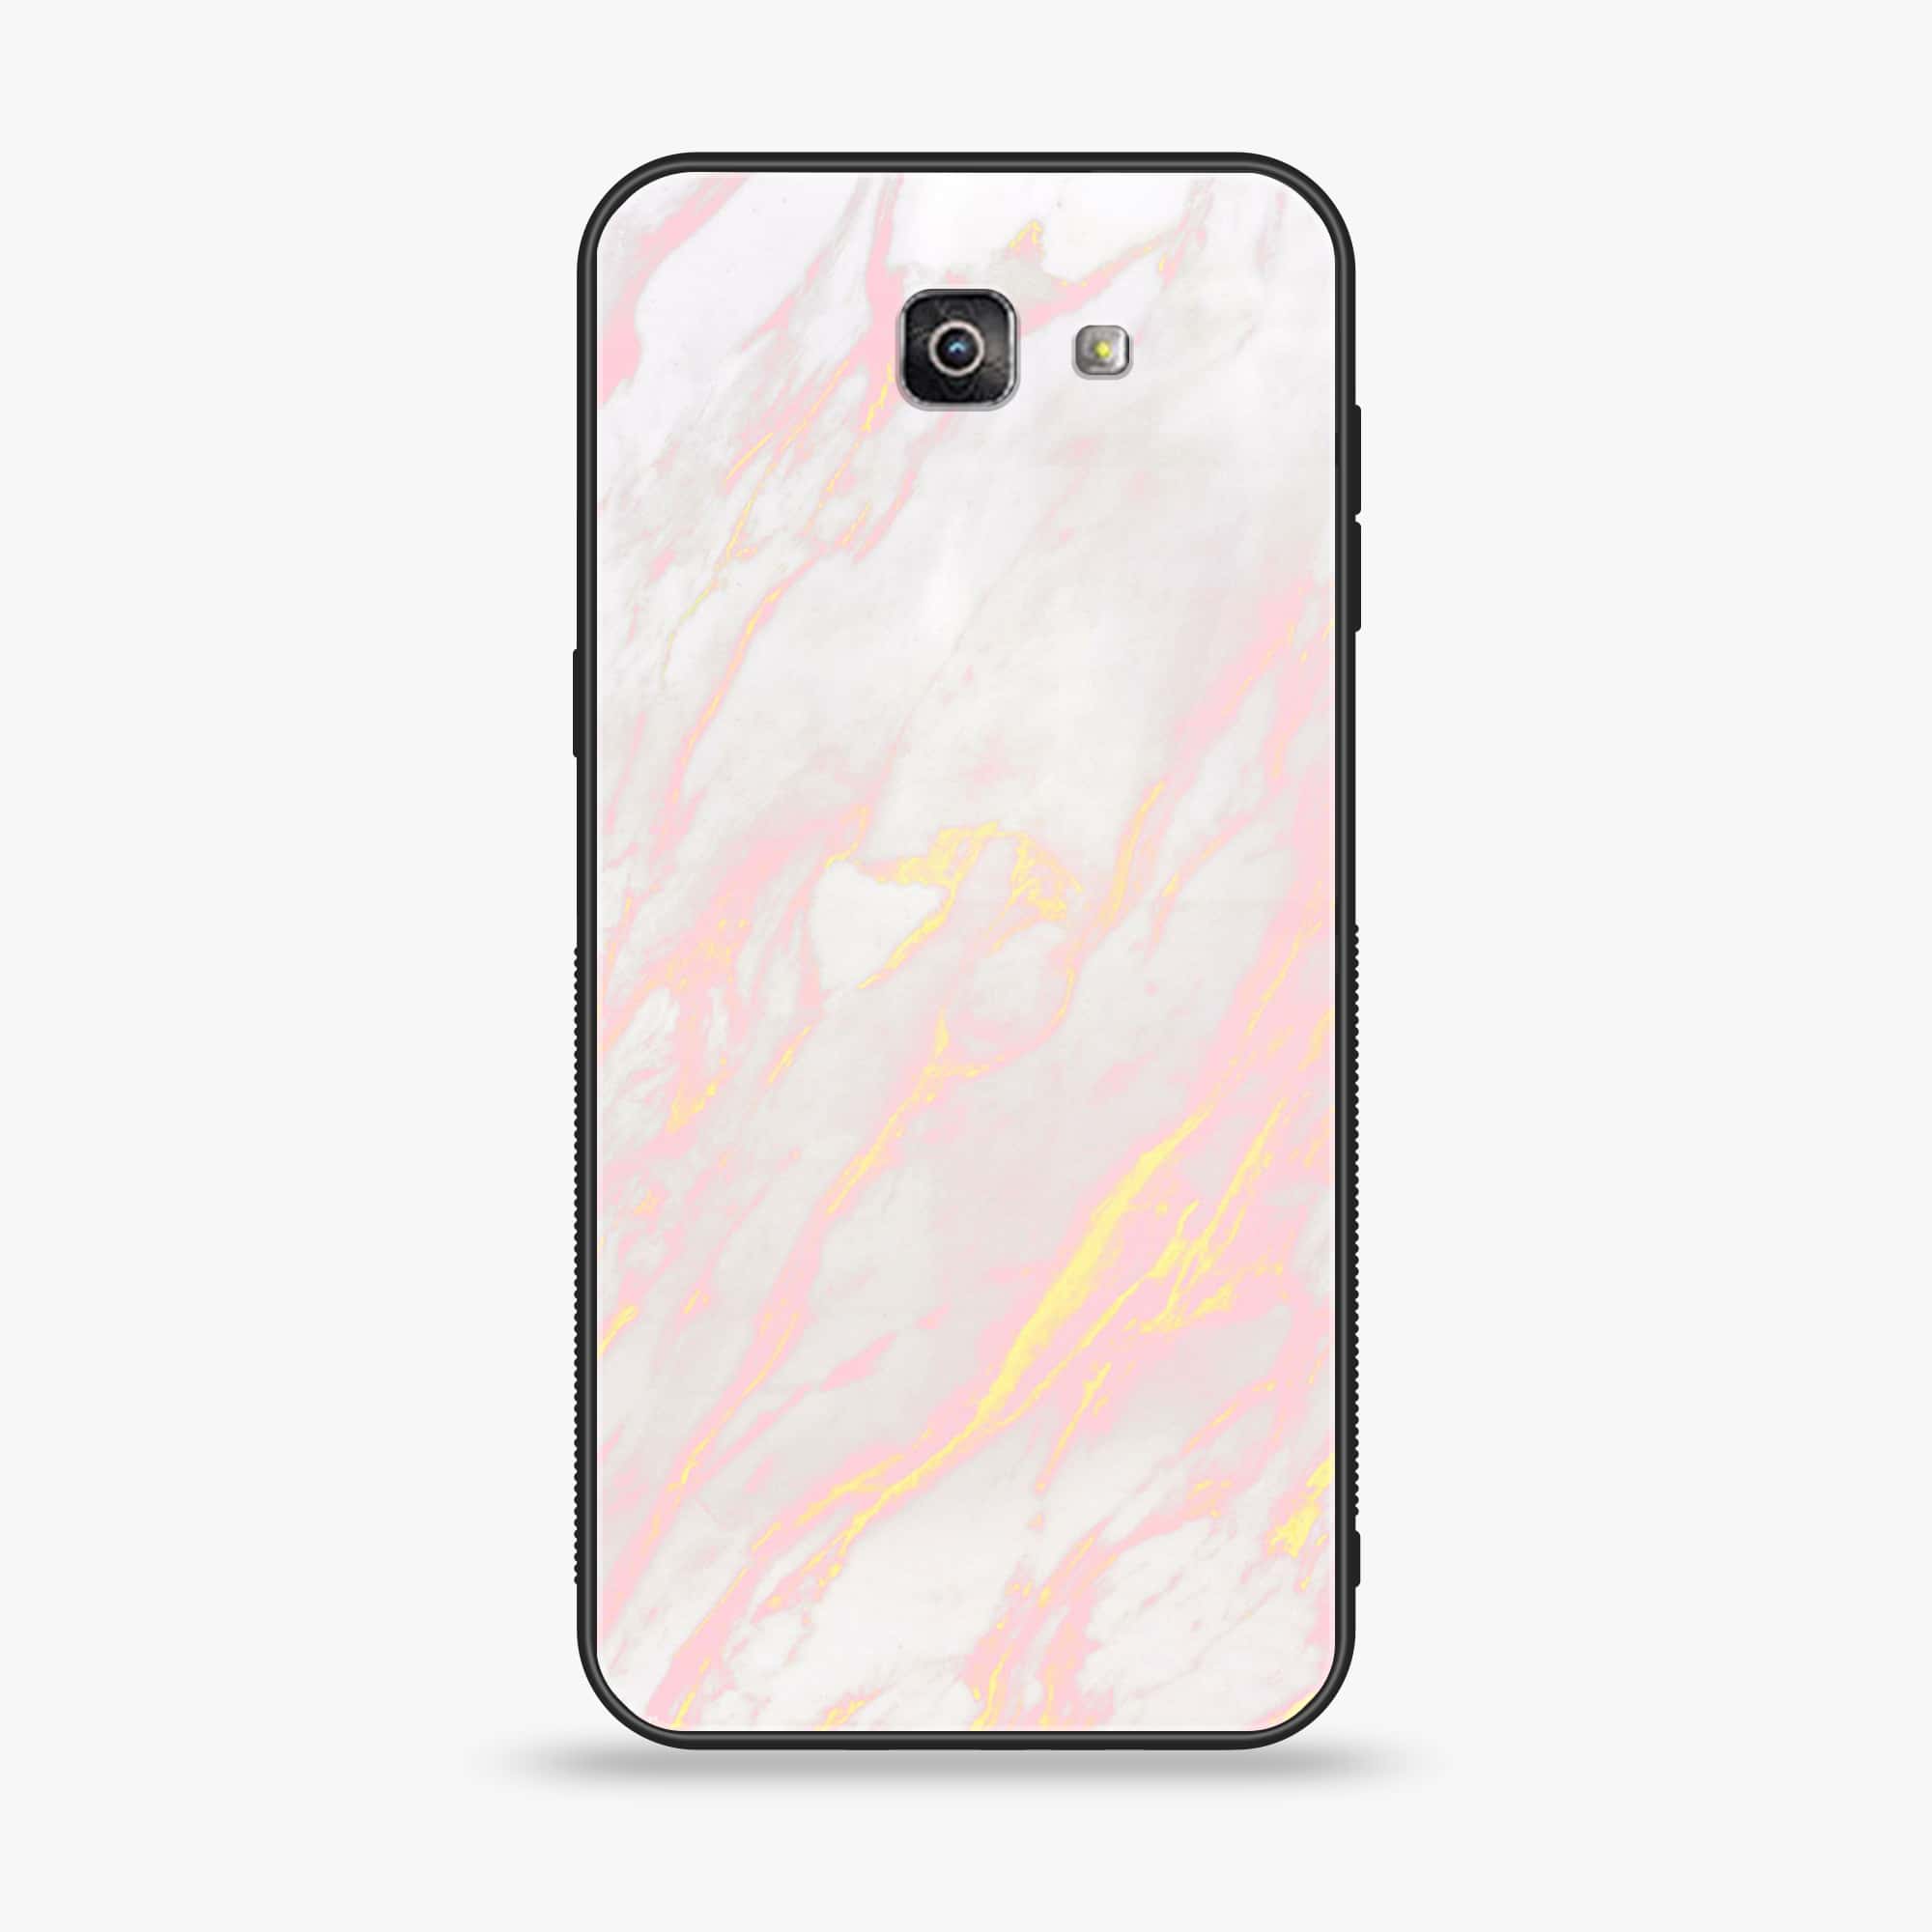 Galaxy J7 Prime 2018 - Pink Marble Series - Premium Printed Glass soft Bumper shock Proof Case